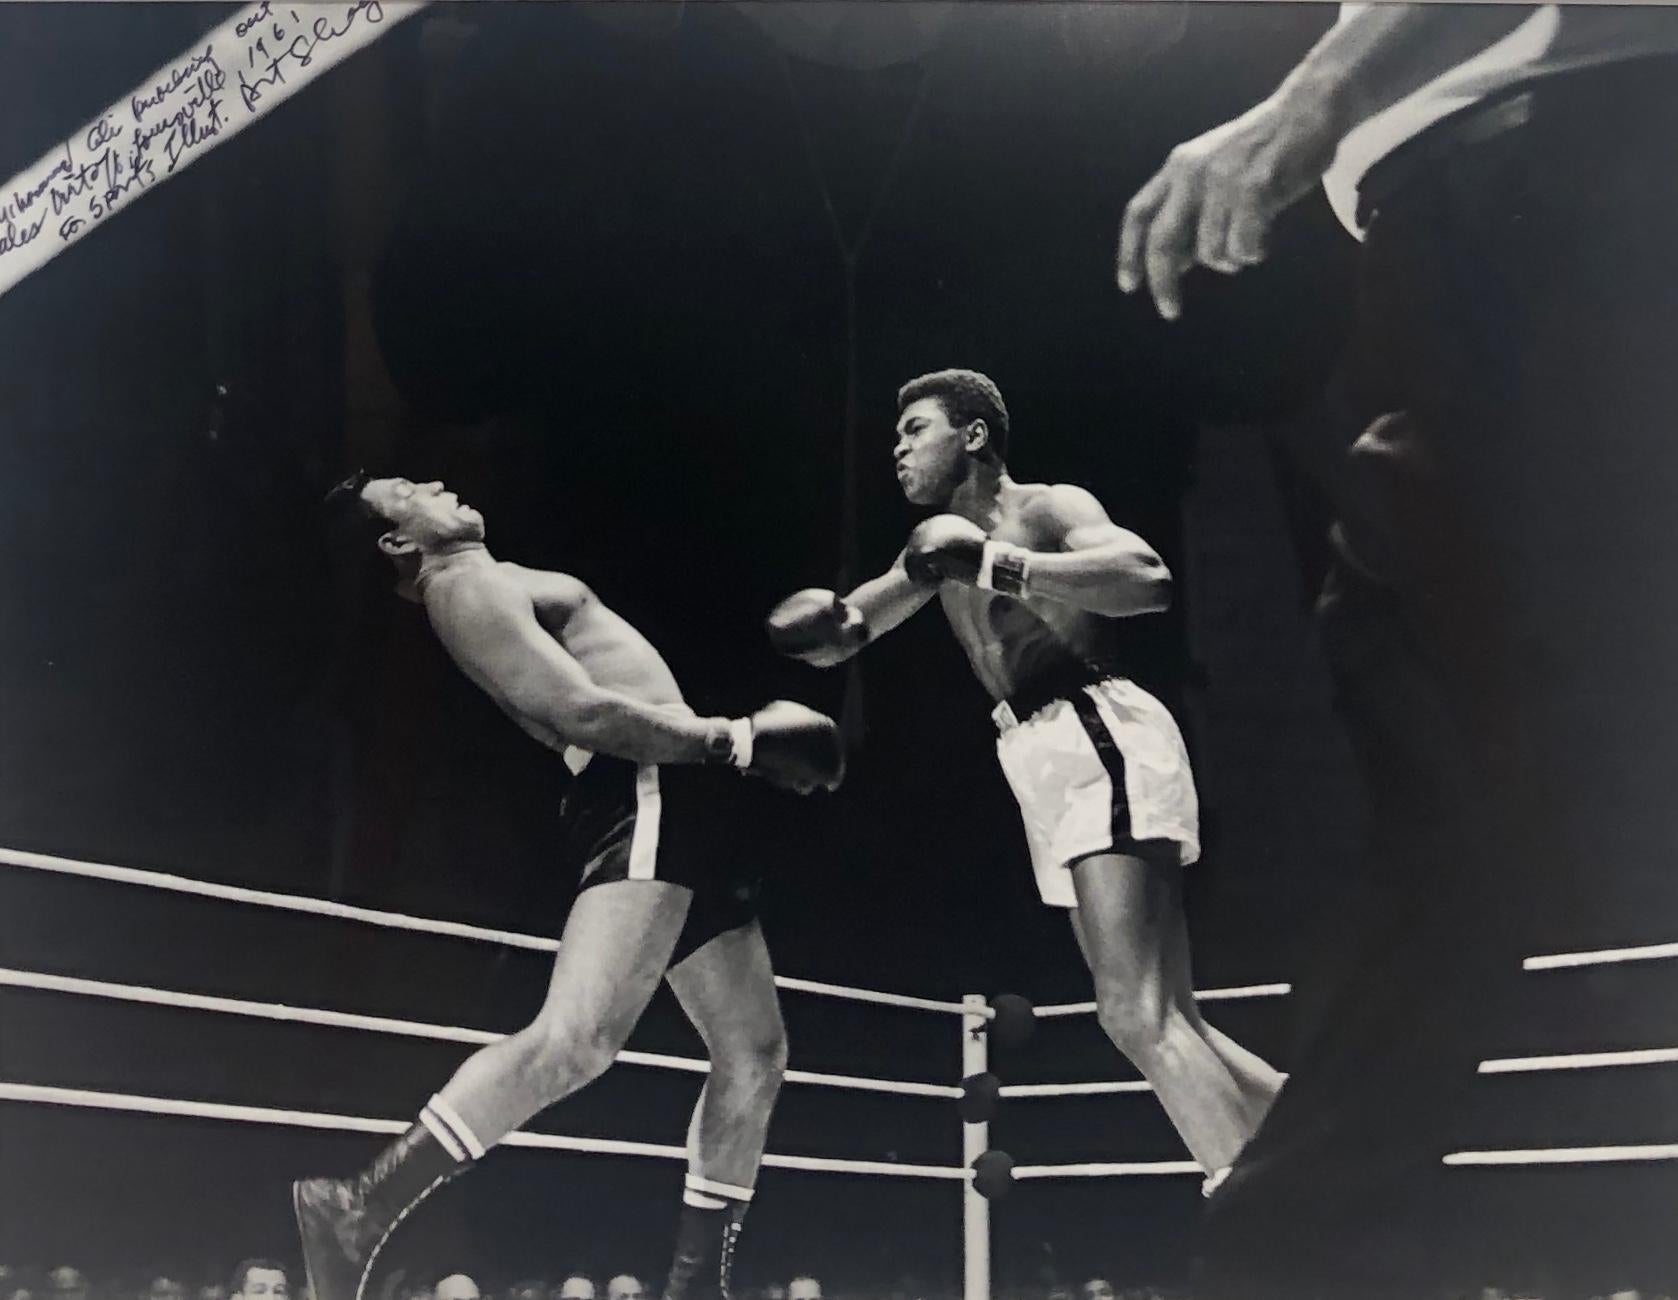 Art Shay Black and White Photograph - Muhammad Ali TKO Punch vs Alex Miteff, Louisville 1961, Black & White Photo